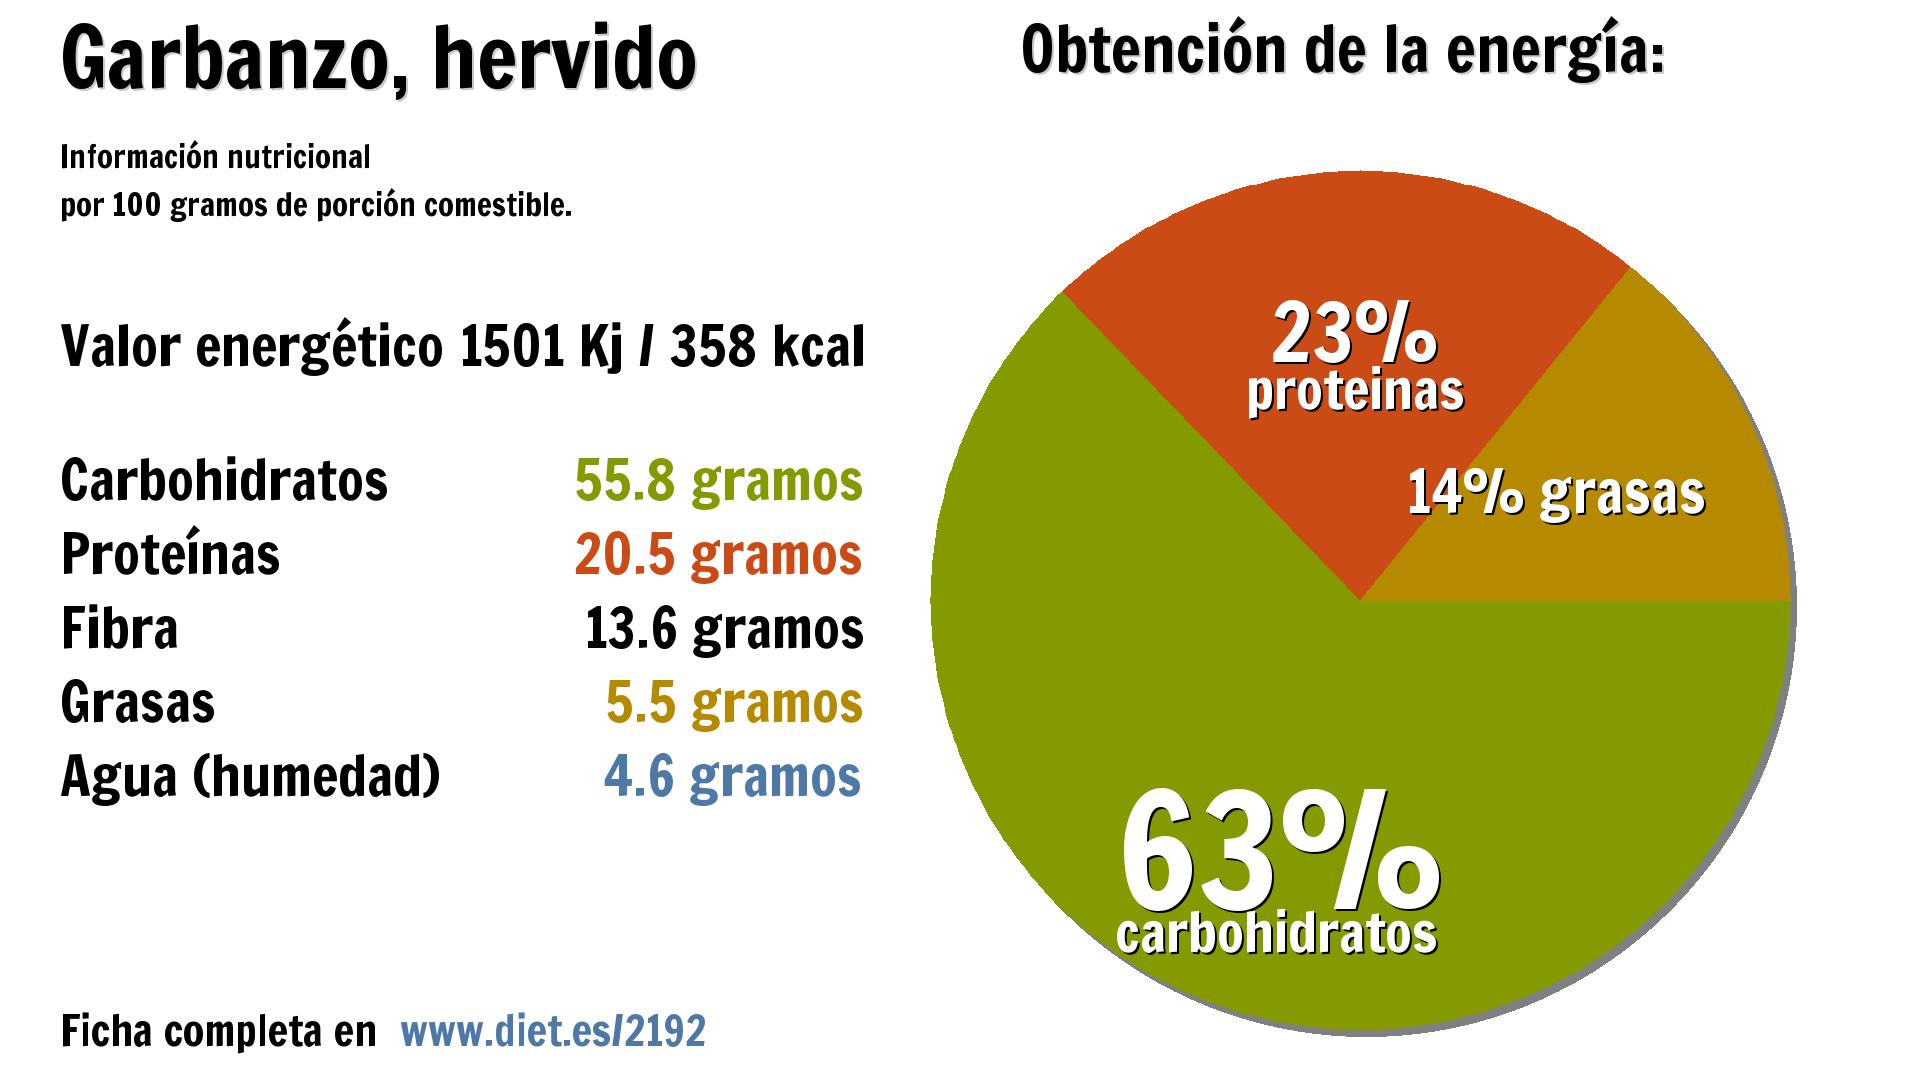 Garbanzo, hervido: energía 1501 Kj, carbohidratos 56 g., proteínas 21 g., fibra 14 g., grasas 6 g. y agua 5 g.